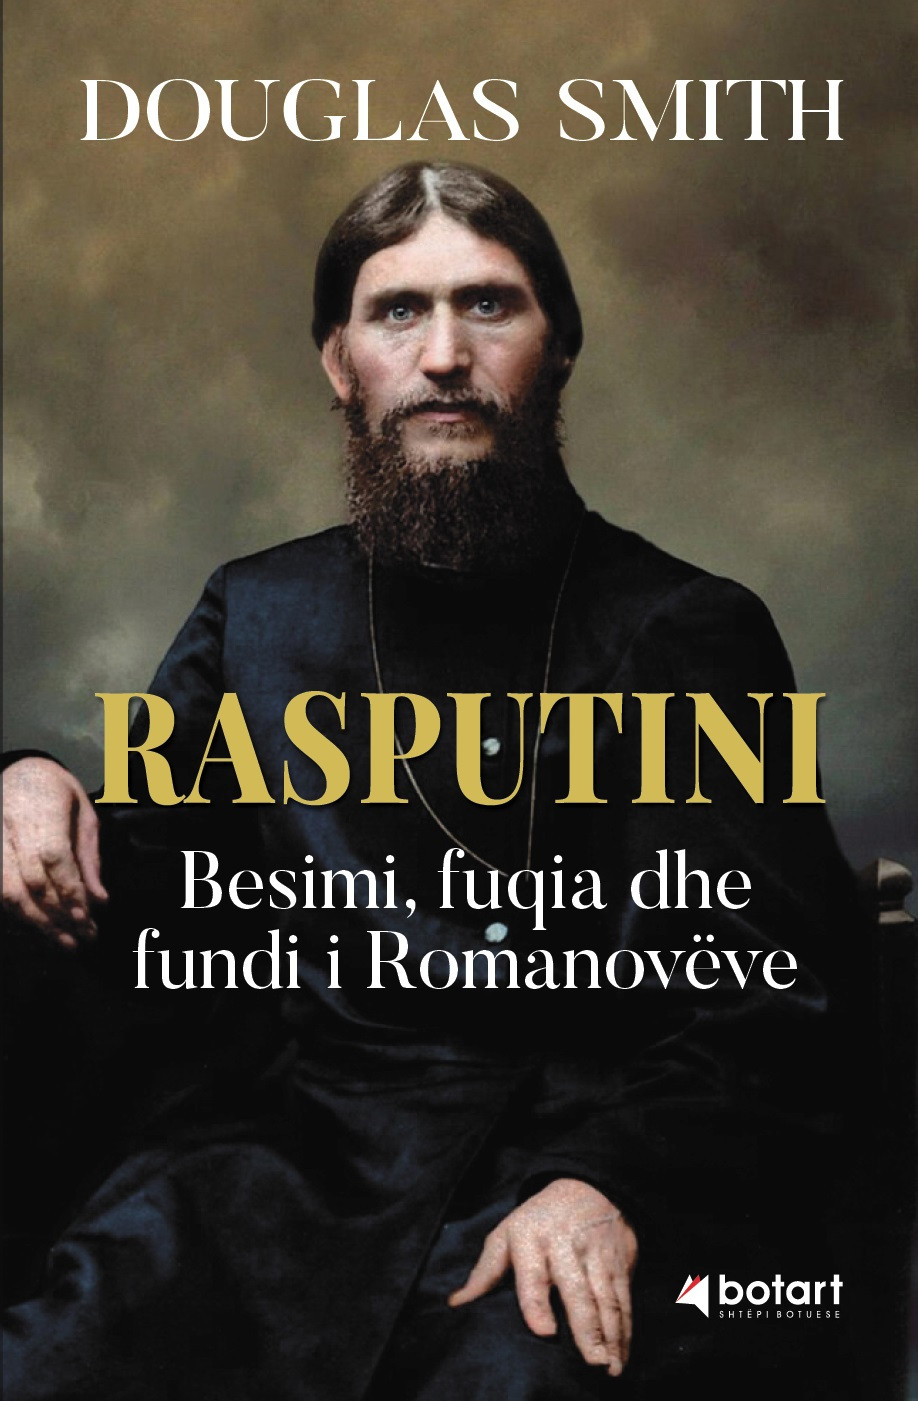 Rasputini - Besimi, fuqia dhe fundi i Romanoveve